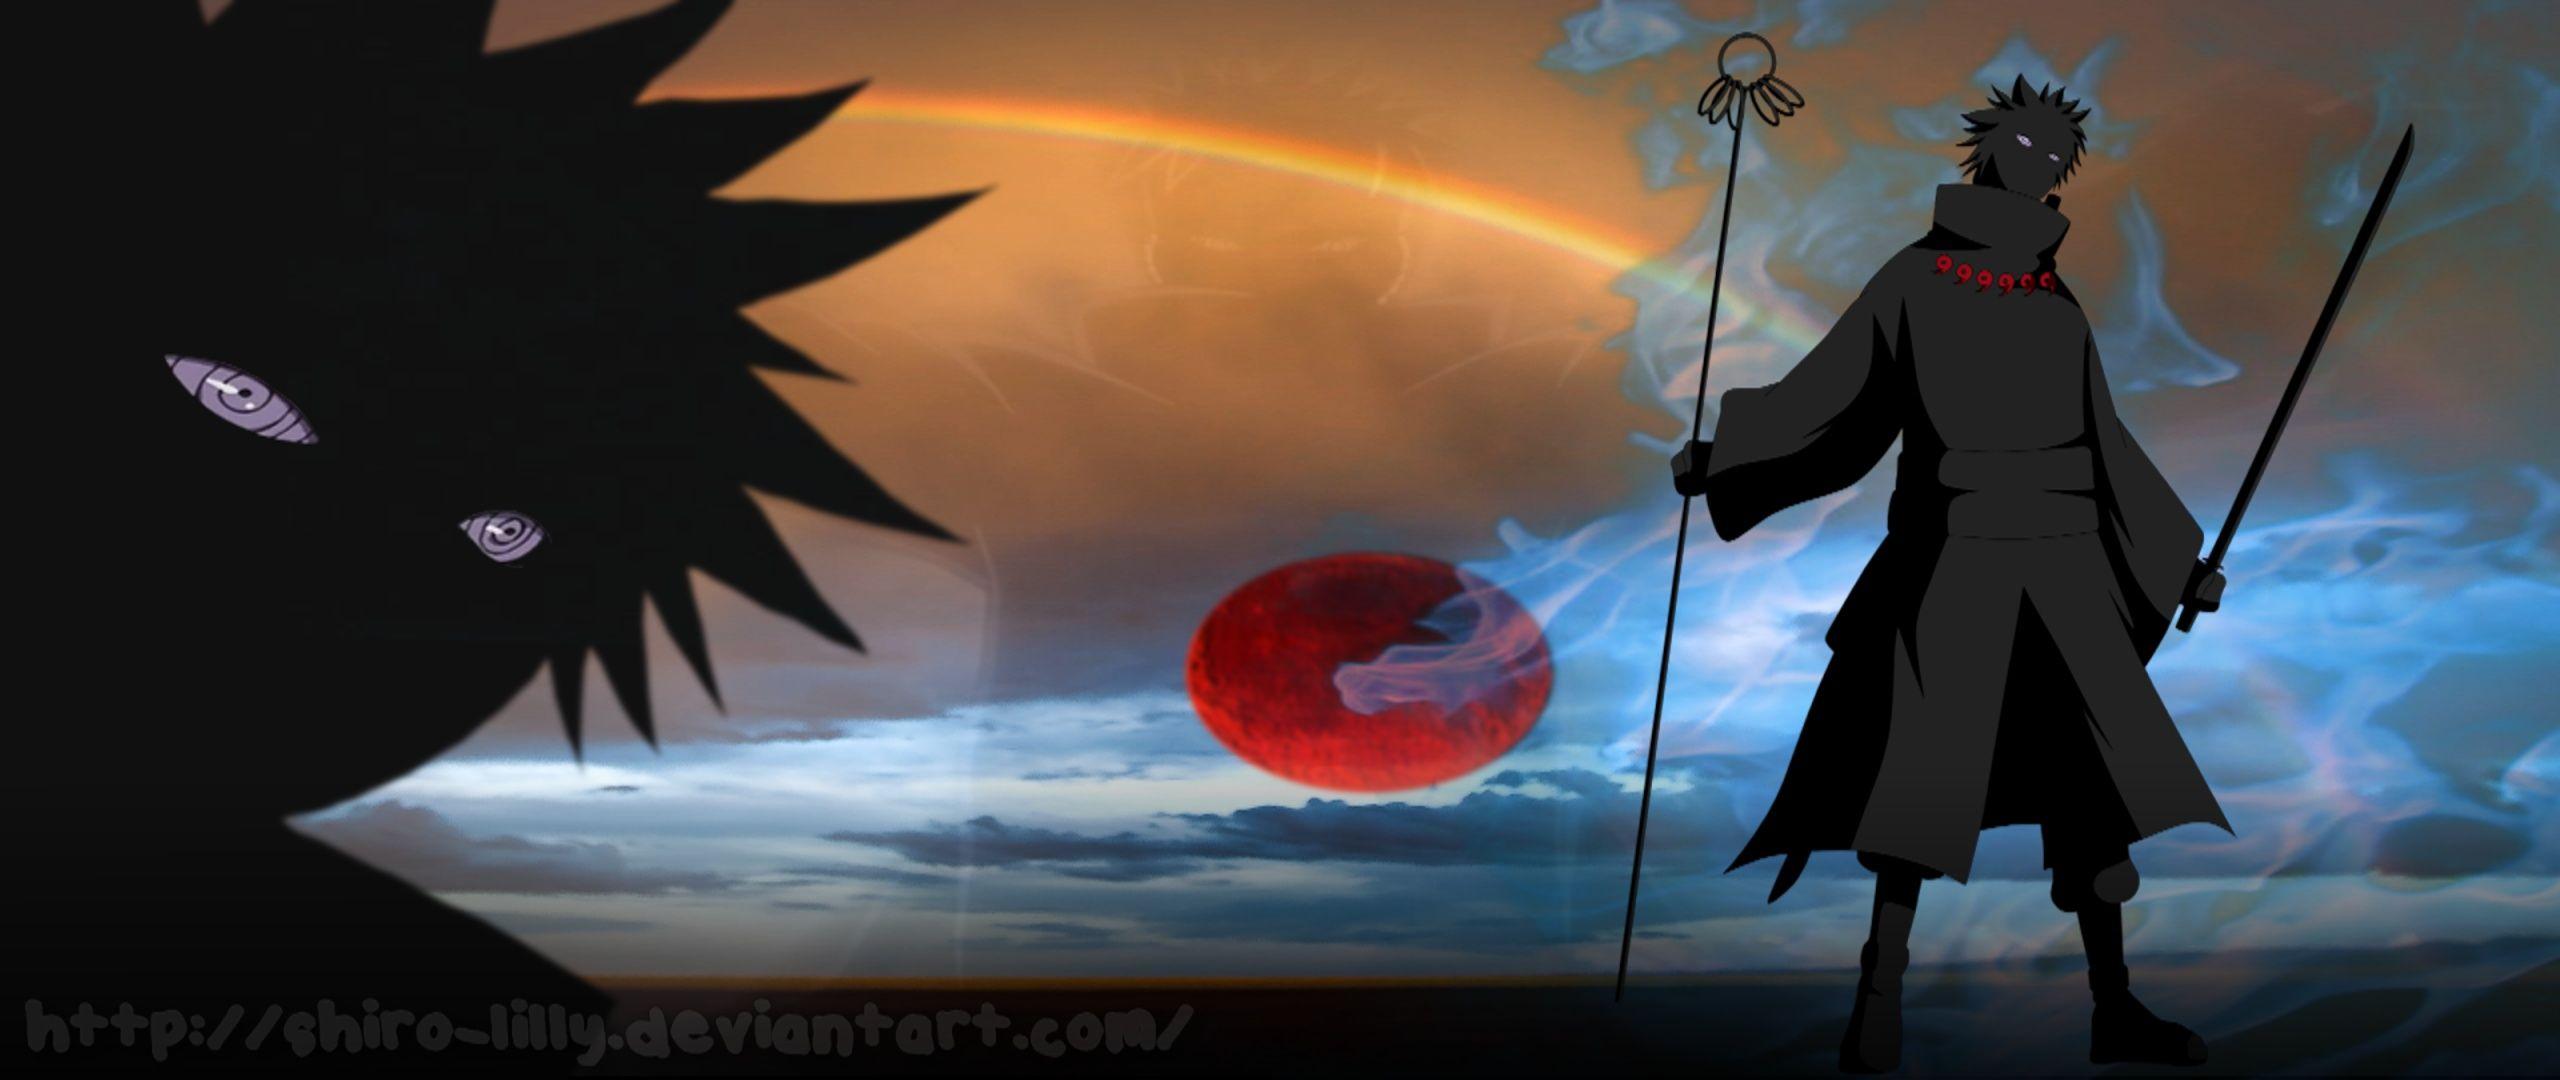 Gambar Rikudou Sennin Dewa Ninja Dalam Anime Naruto